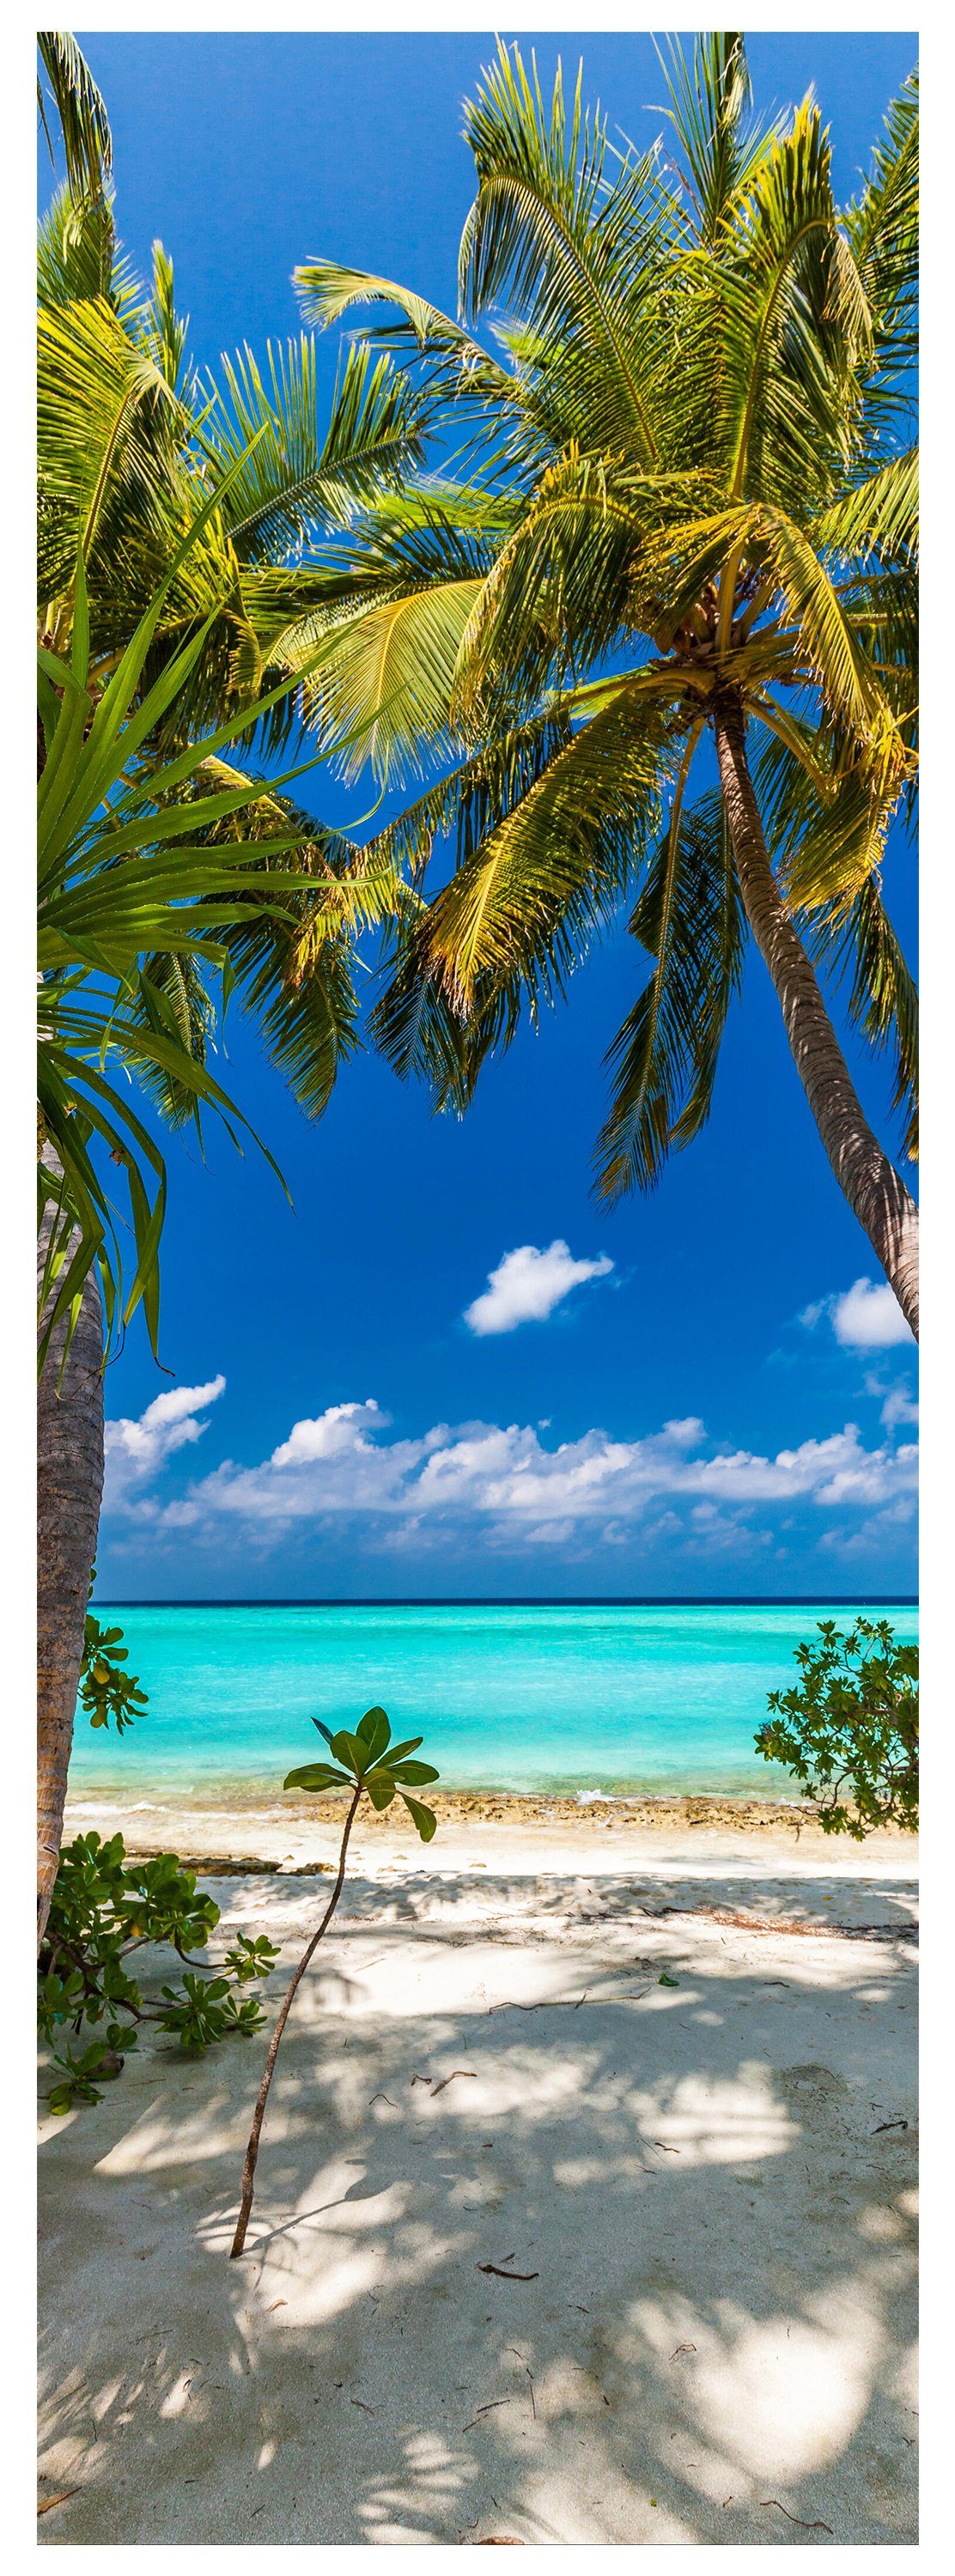 wandmotiv24 Türtapete Blick aufs Meer, Palmen, Paradies, Sand, glatt, Fototapete, Wandtapete, Motivtapete, matt, selbstklebende Dekorfolie